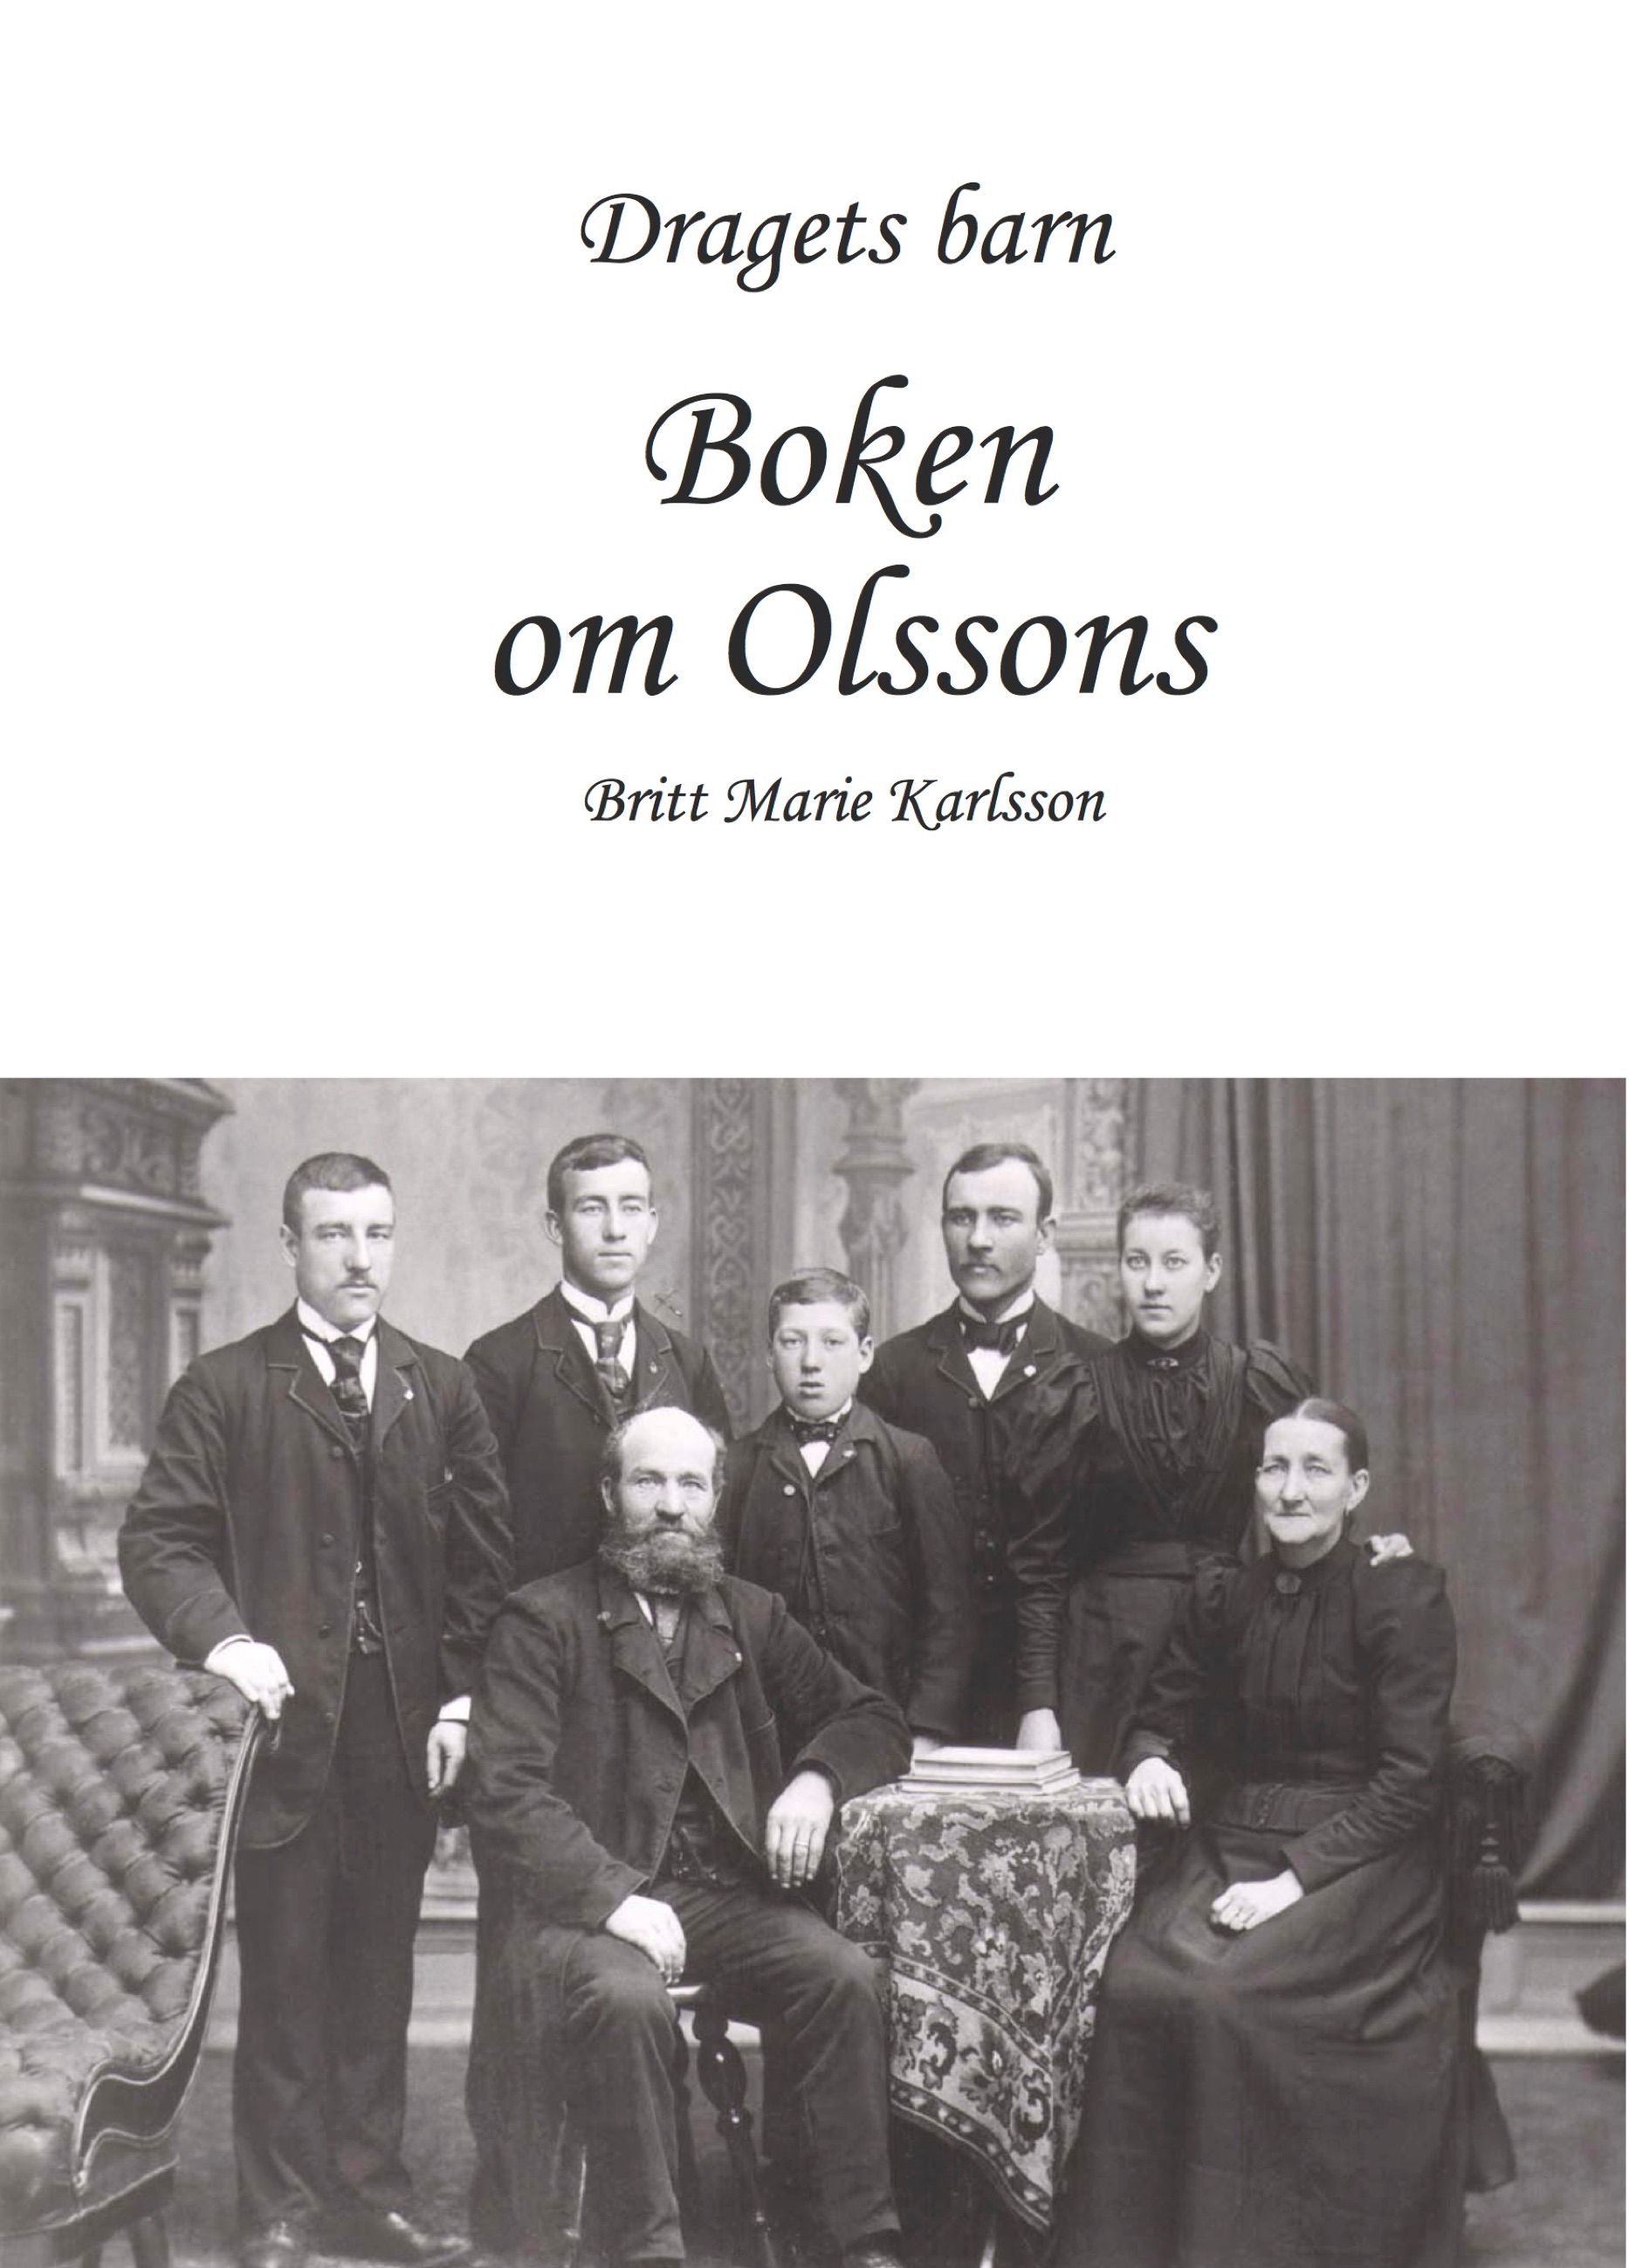 Dragets barn, Boken om Olssons, eBook by Brittmarie Karlsson